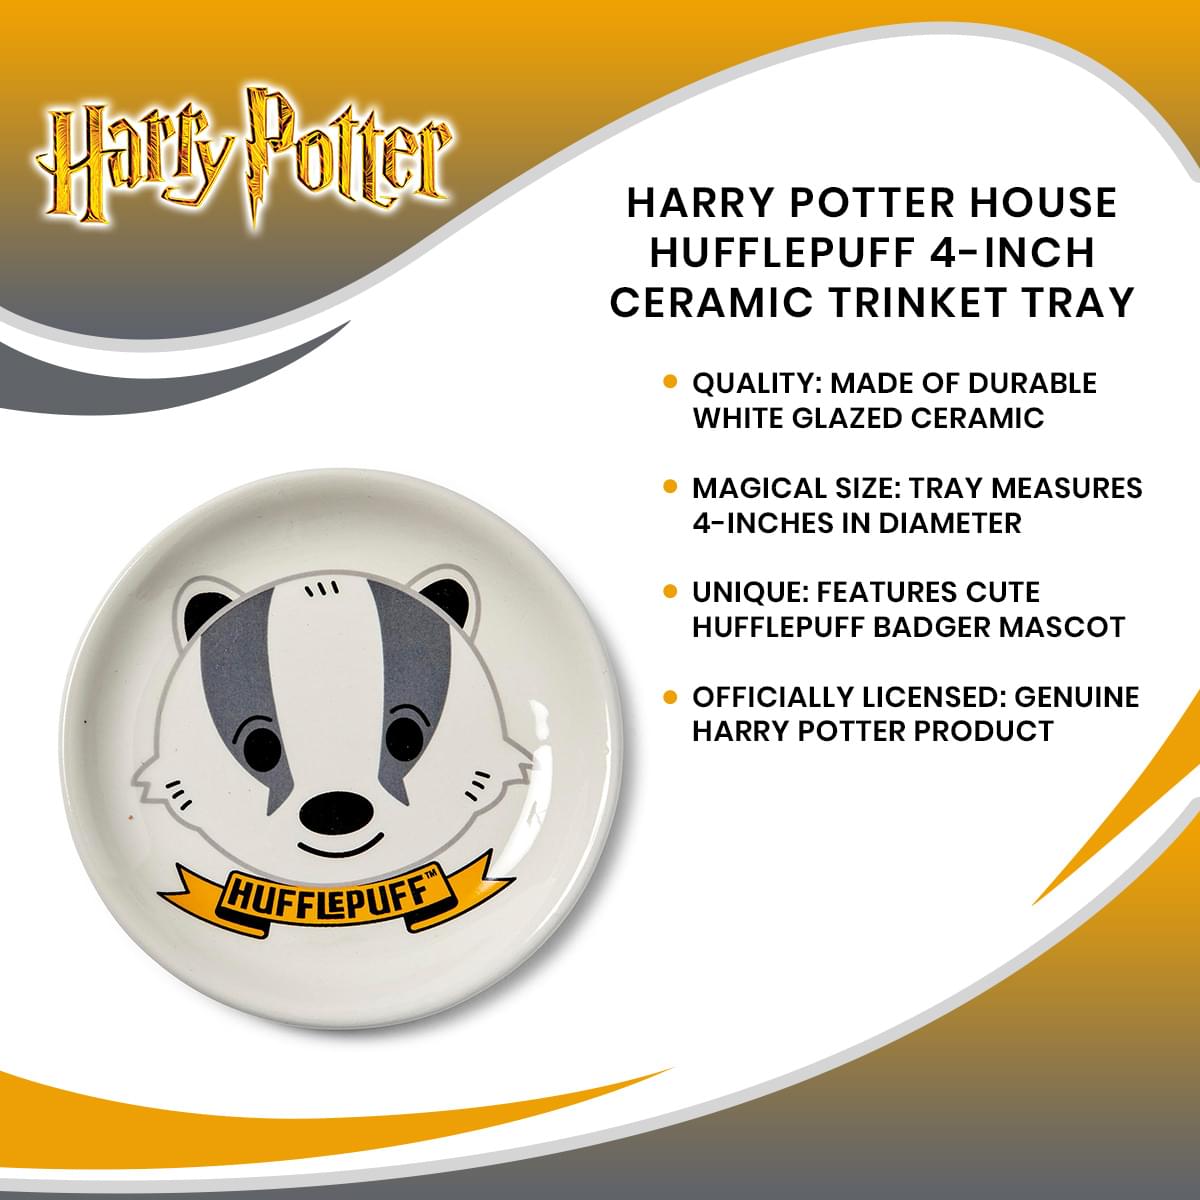 Harry Potter House Hufflepuff 4-Inch Ceramic Trinket Tray